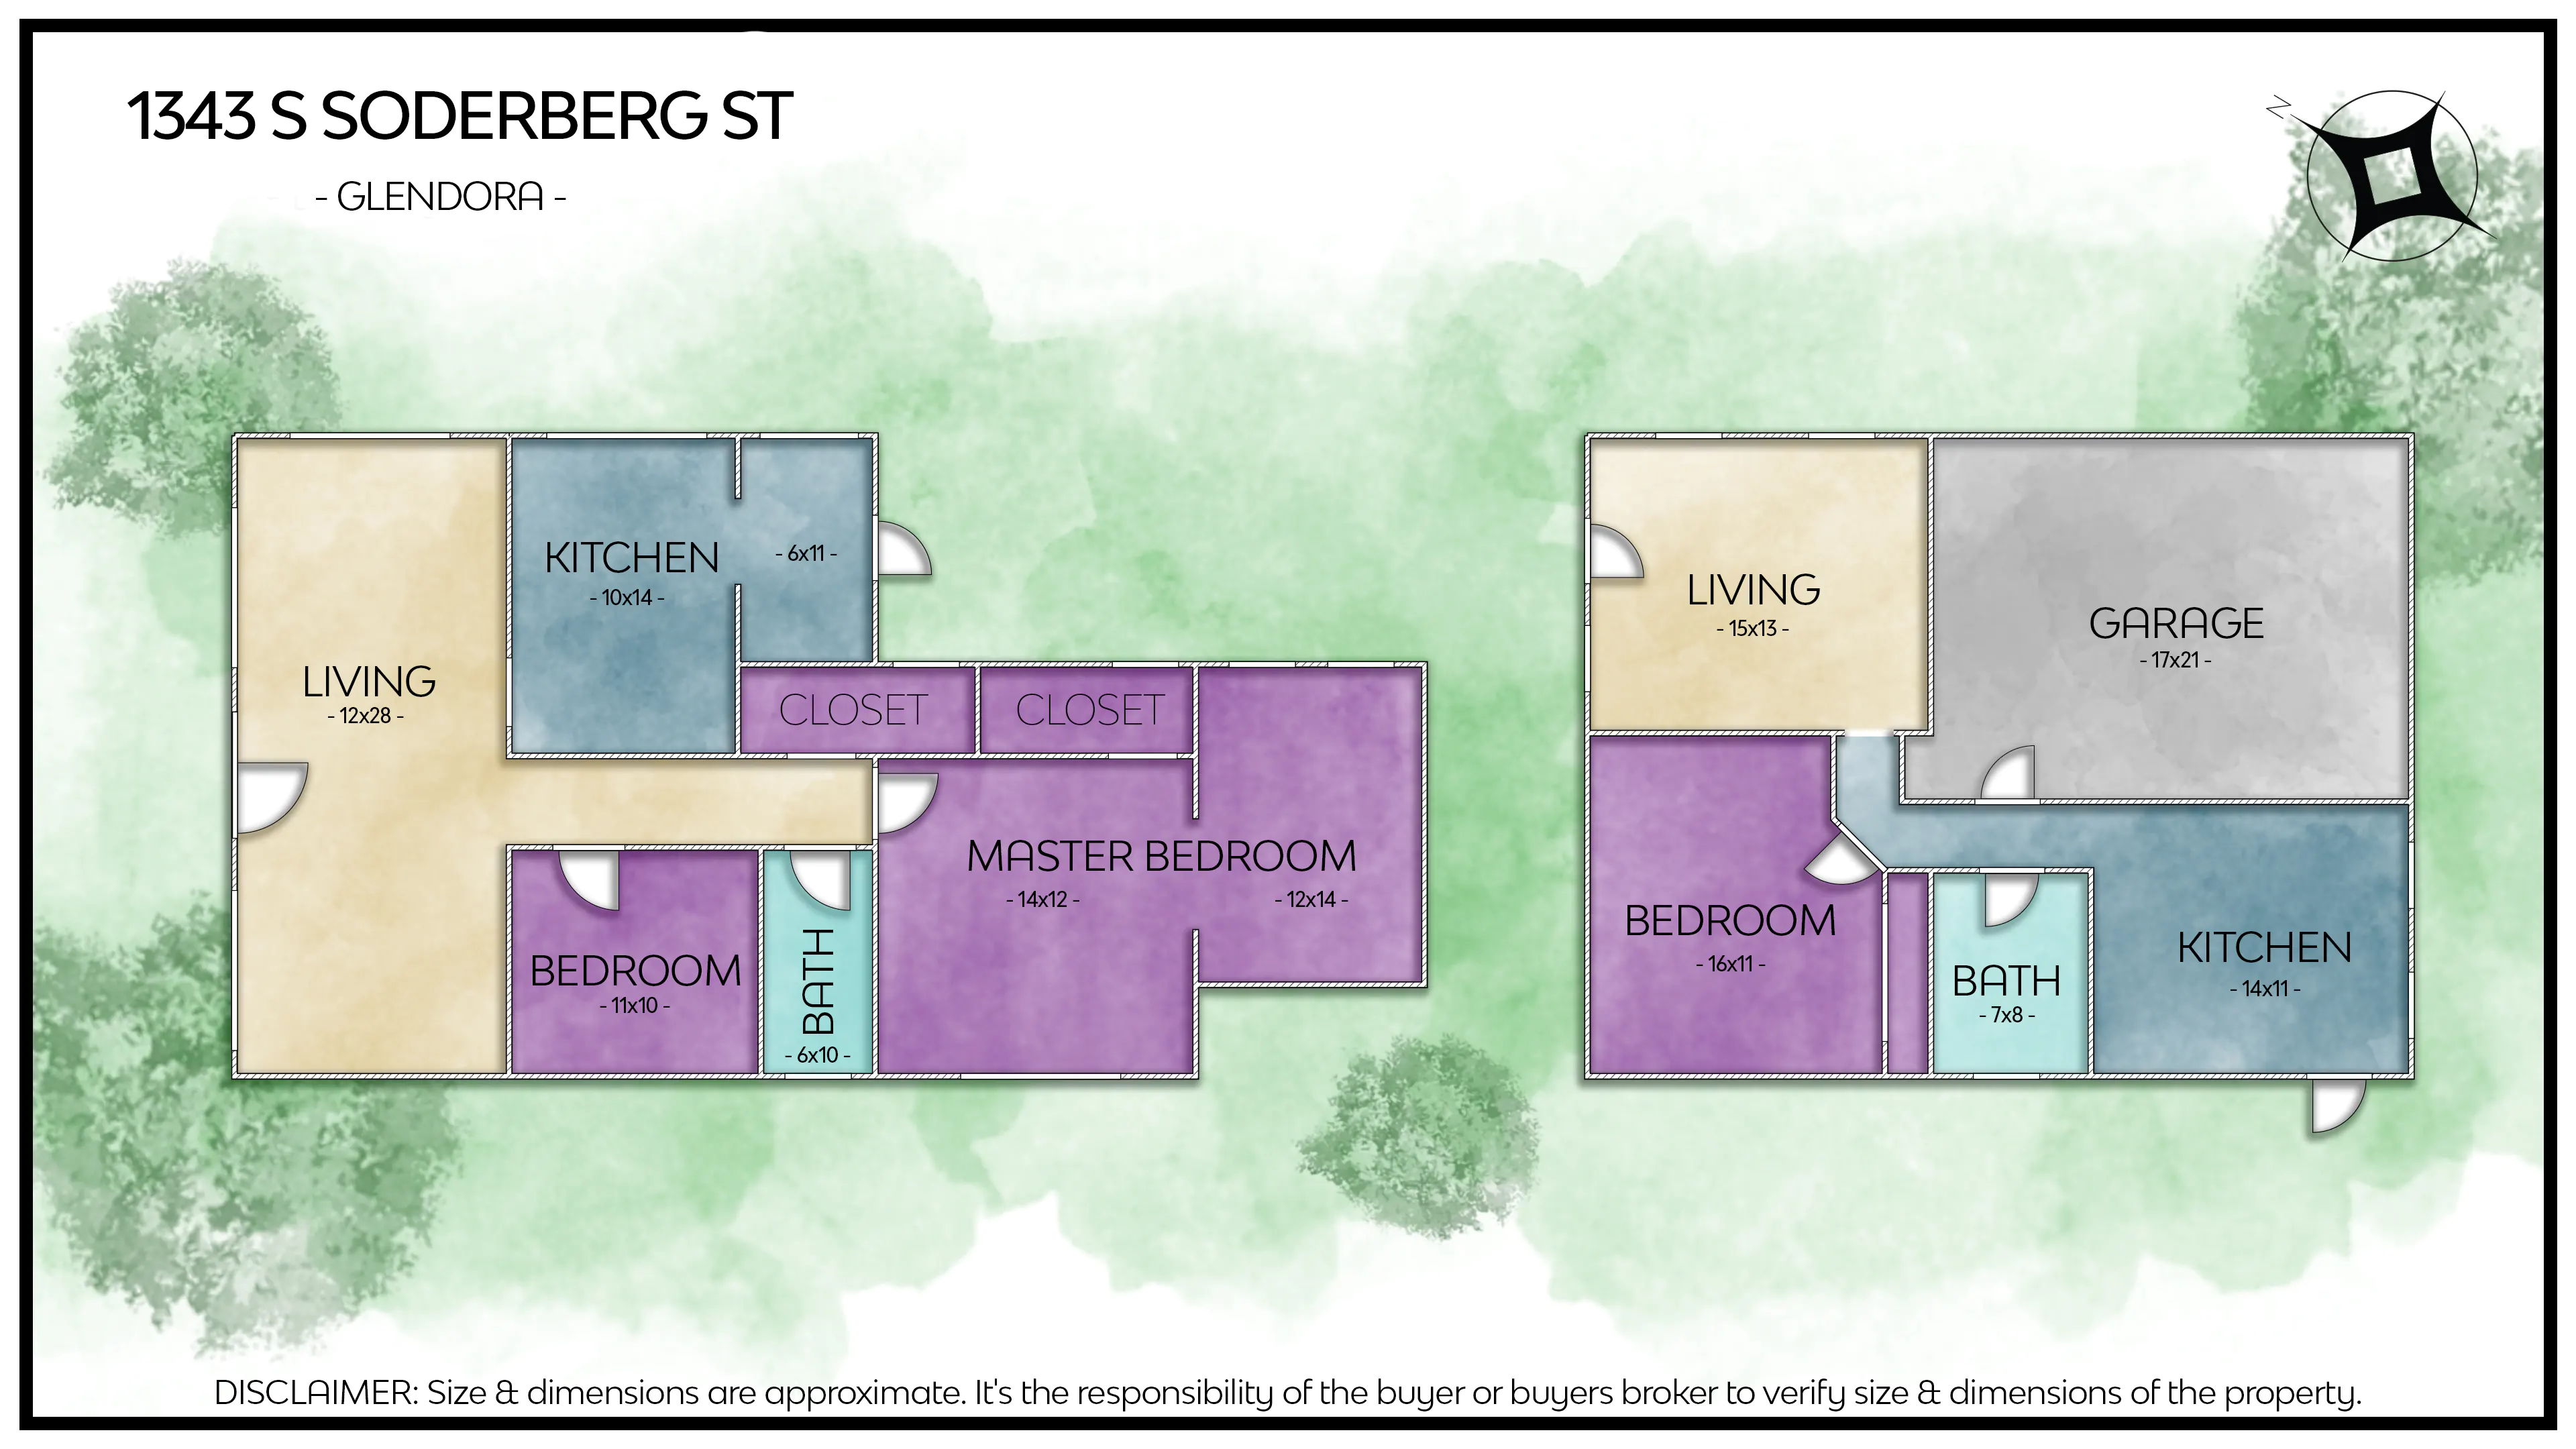 Watercolor floor plan of a Glendora property, illustrating HighSellHomes.com's floor plan services